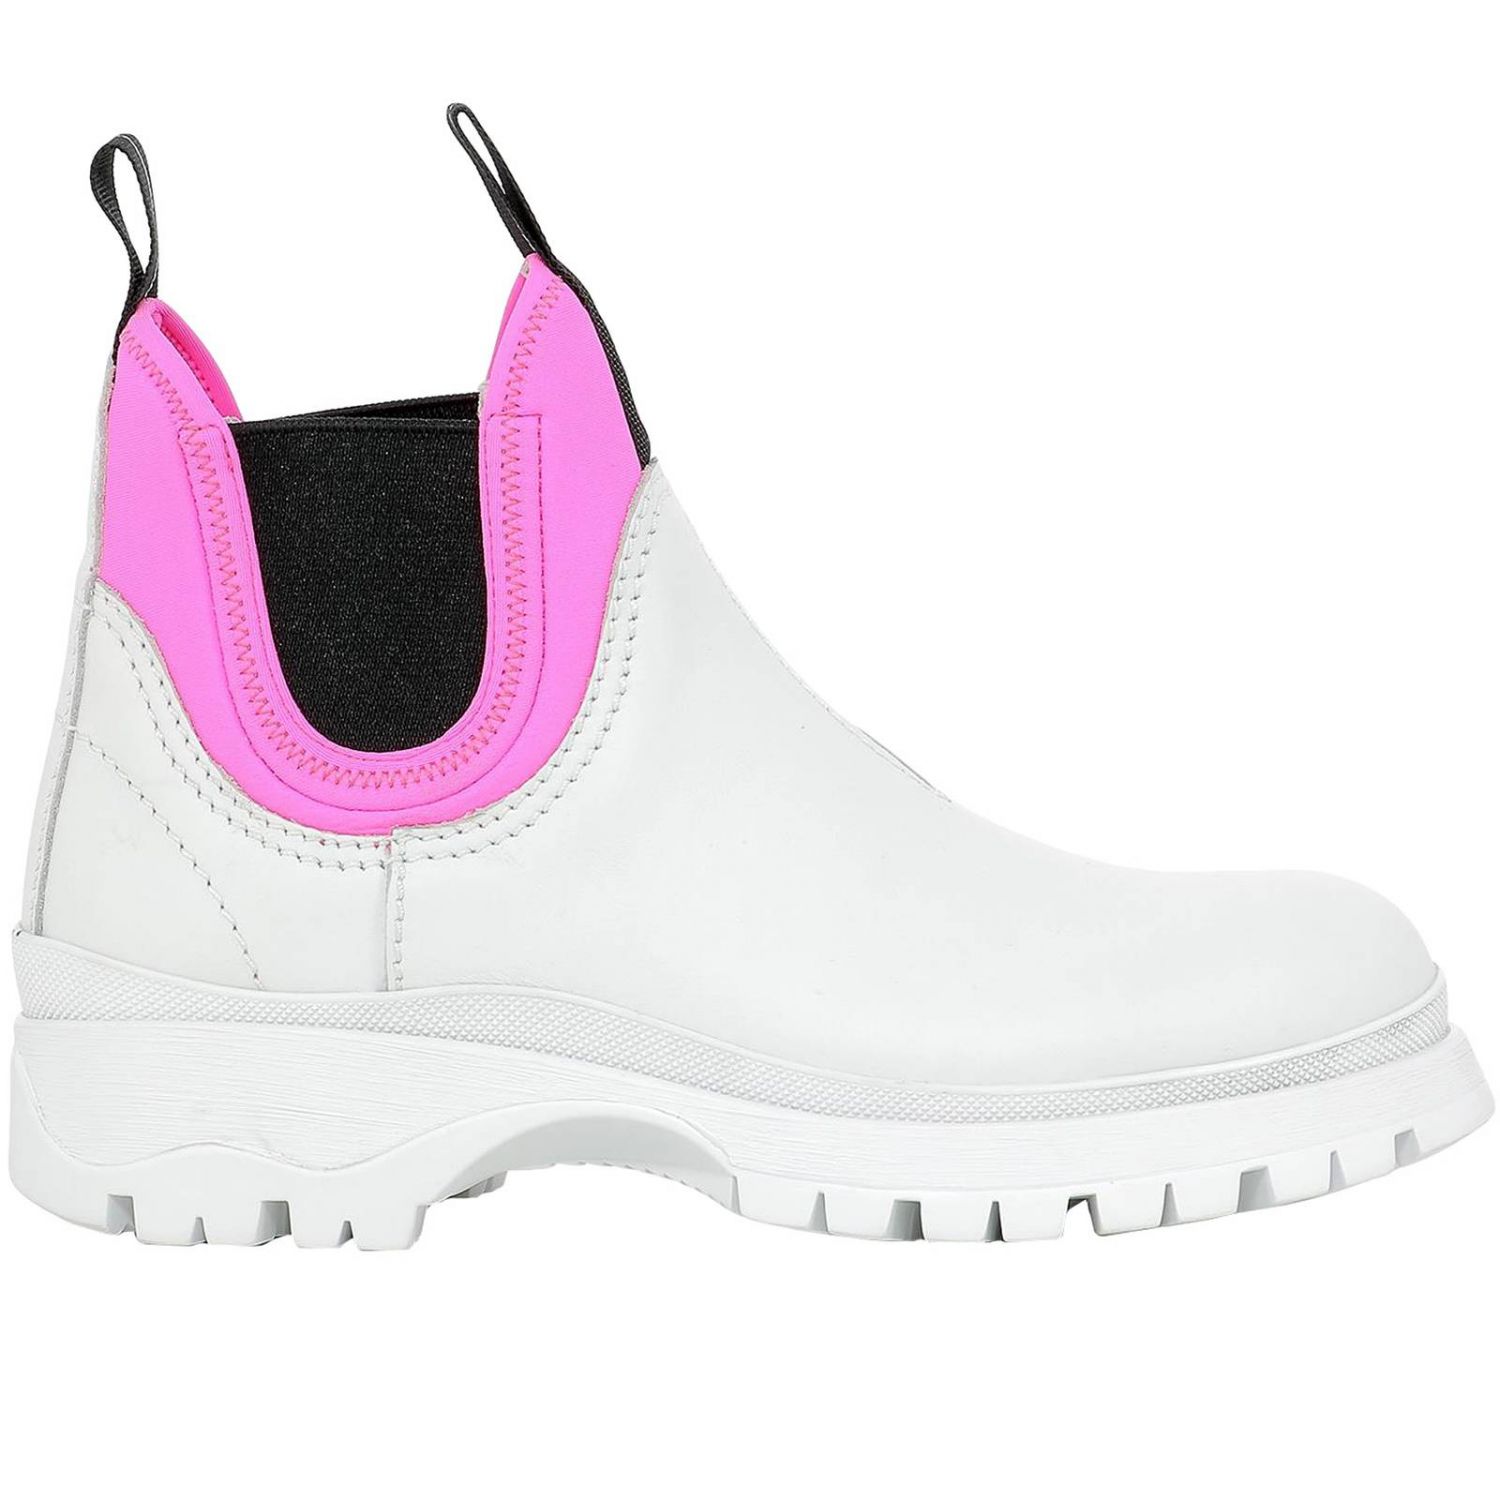 prada pink and white boots